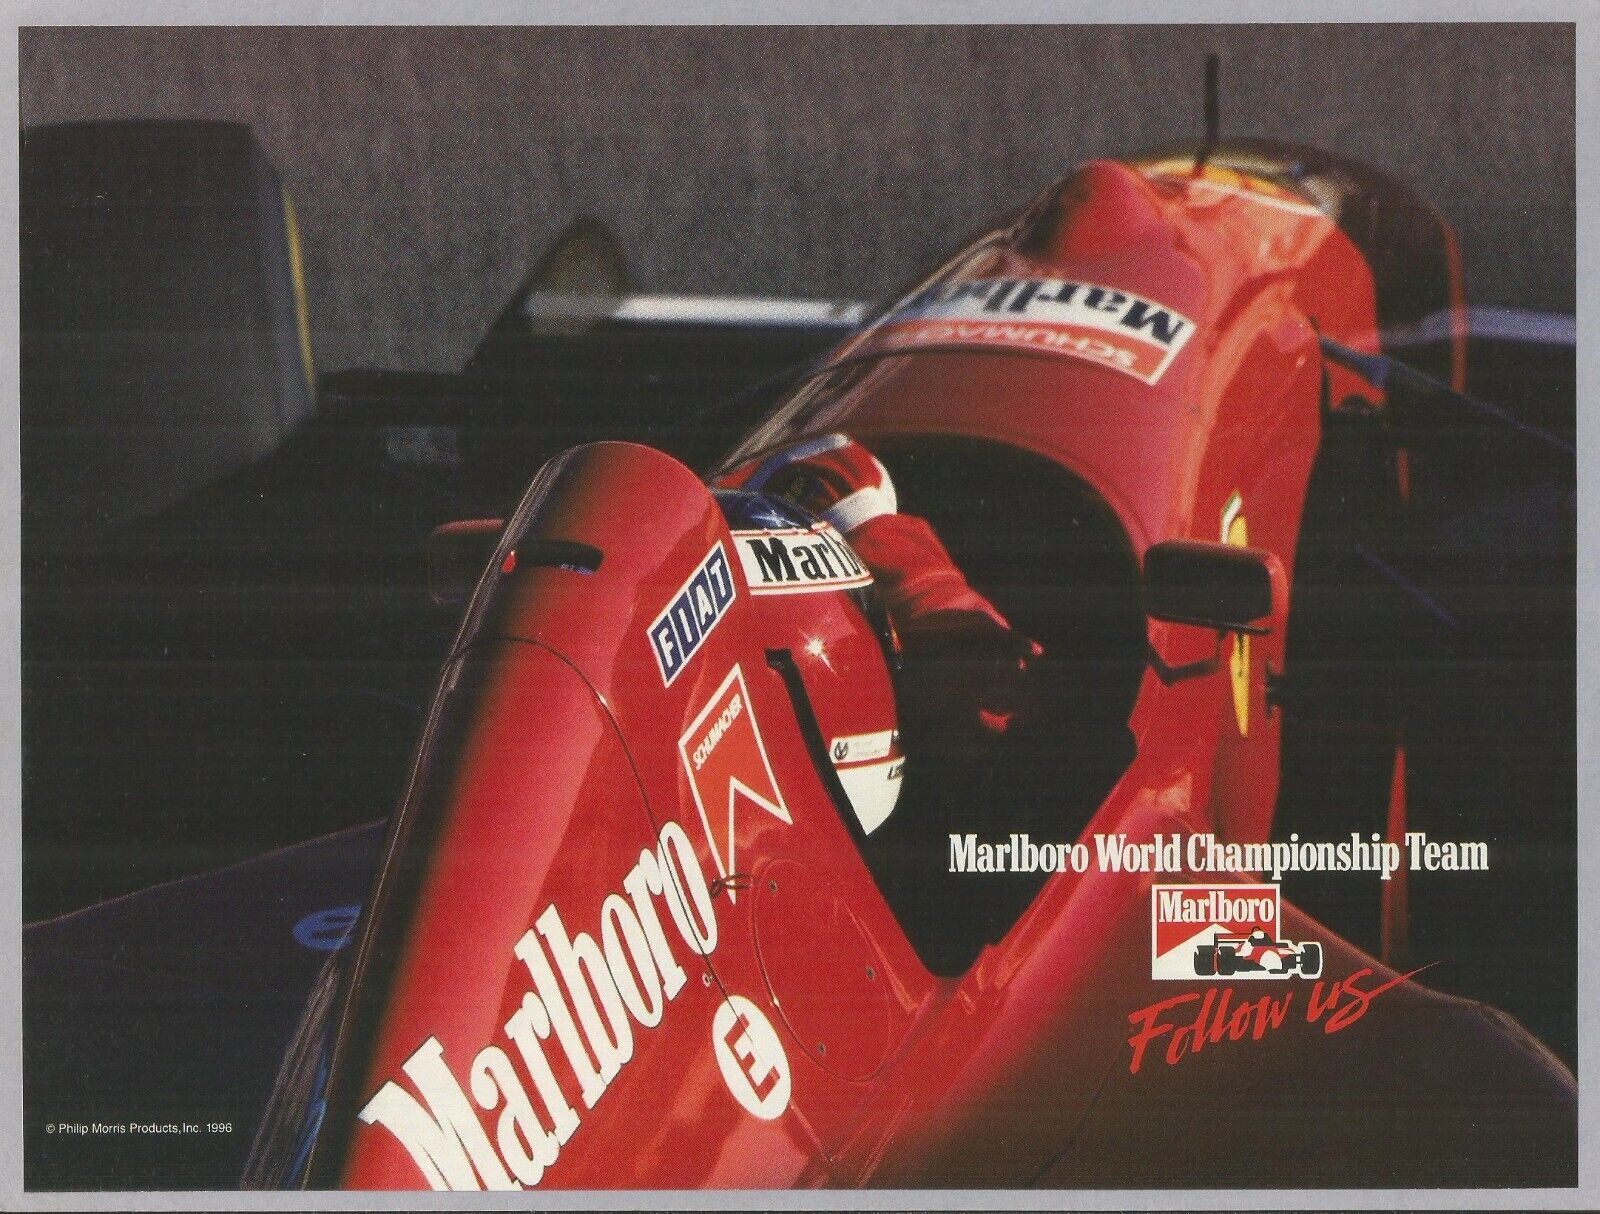 MARLBORO Cigarettes - Marlboro World Championship Team - 1996 Vintage Print Ad